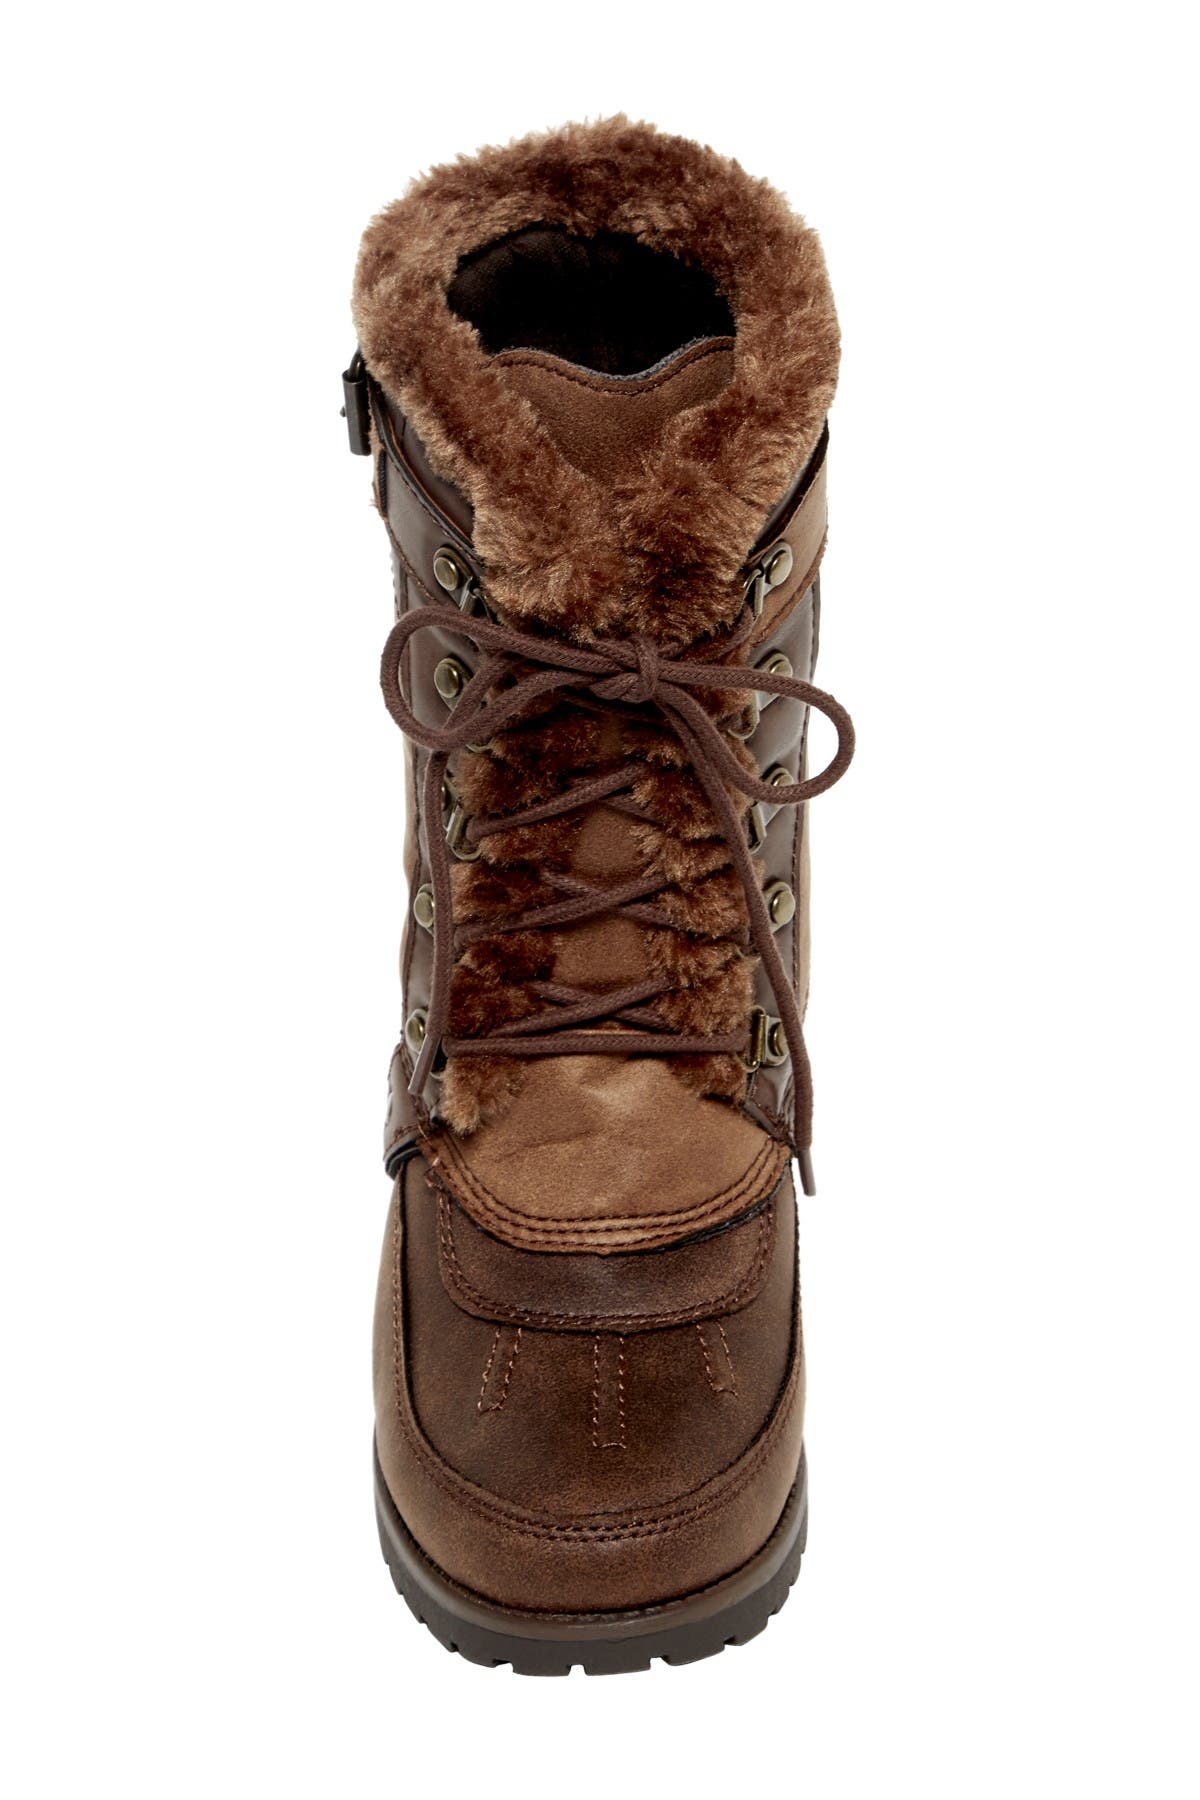 rock & candy danlea faux fur lined boot